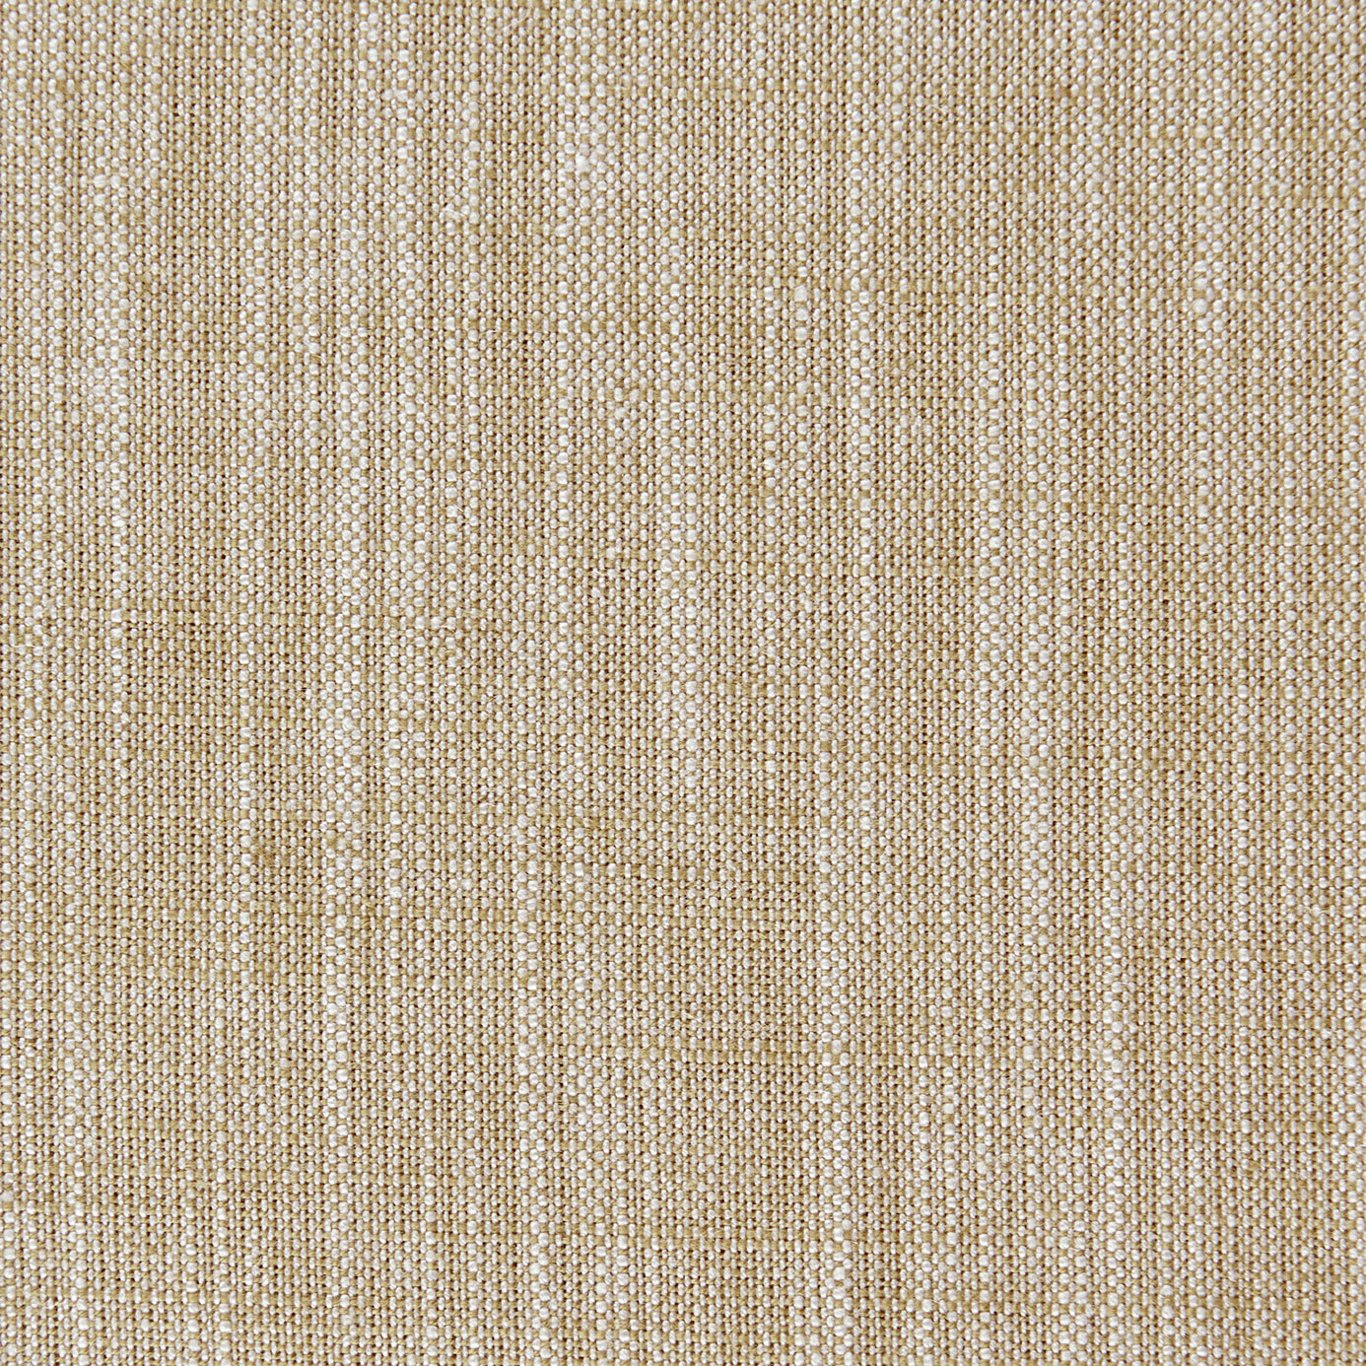 Biarritz Bamboo Fabric by CNC